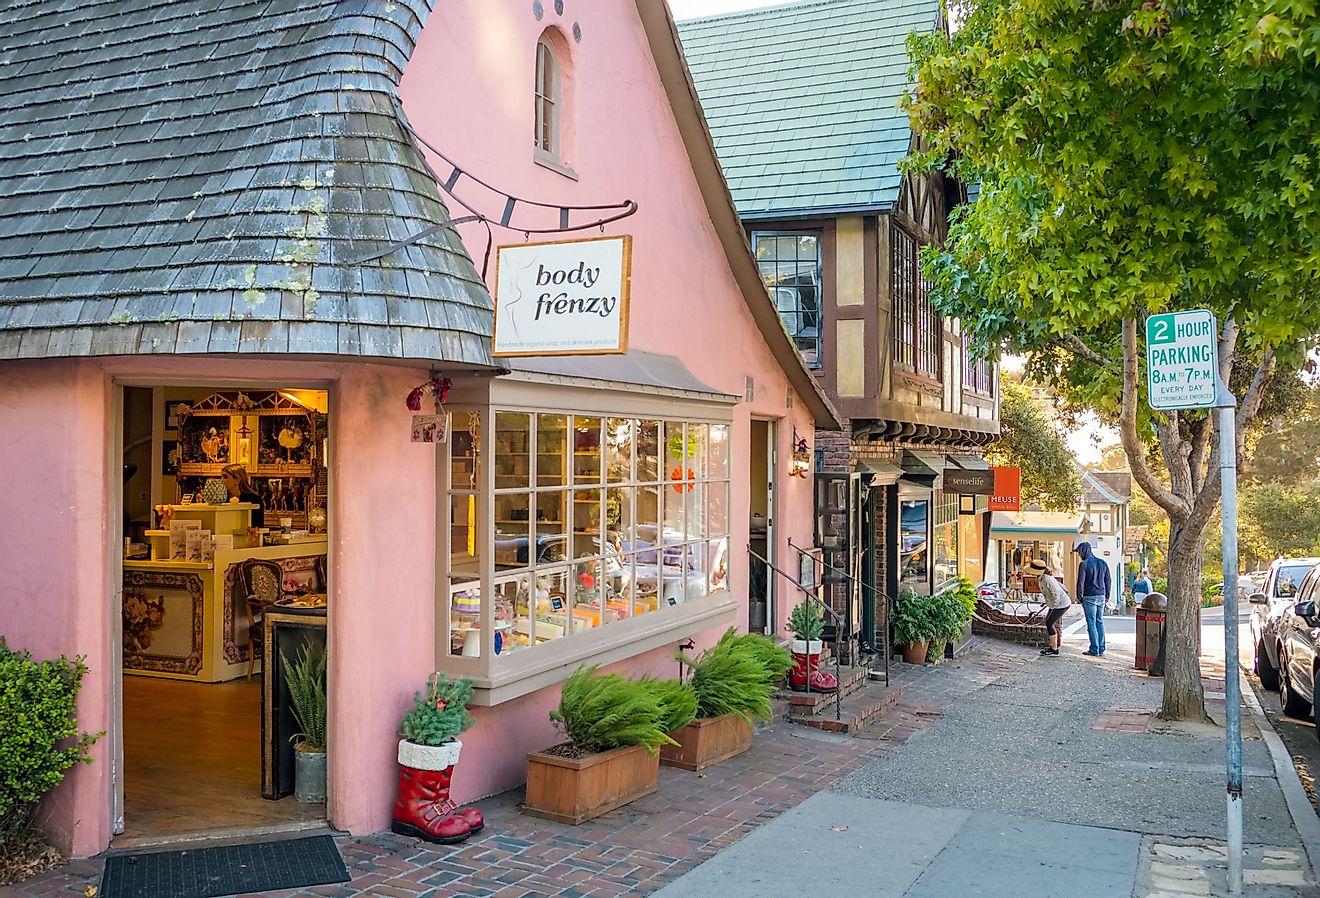 Small stores along the sidewalk in Carmel, California, USA. Image credit Robert Mullan via Shutterstock.